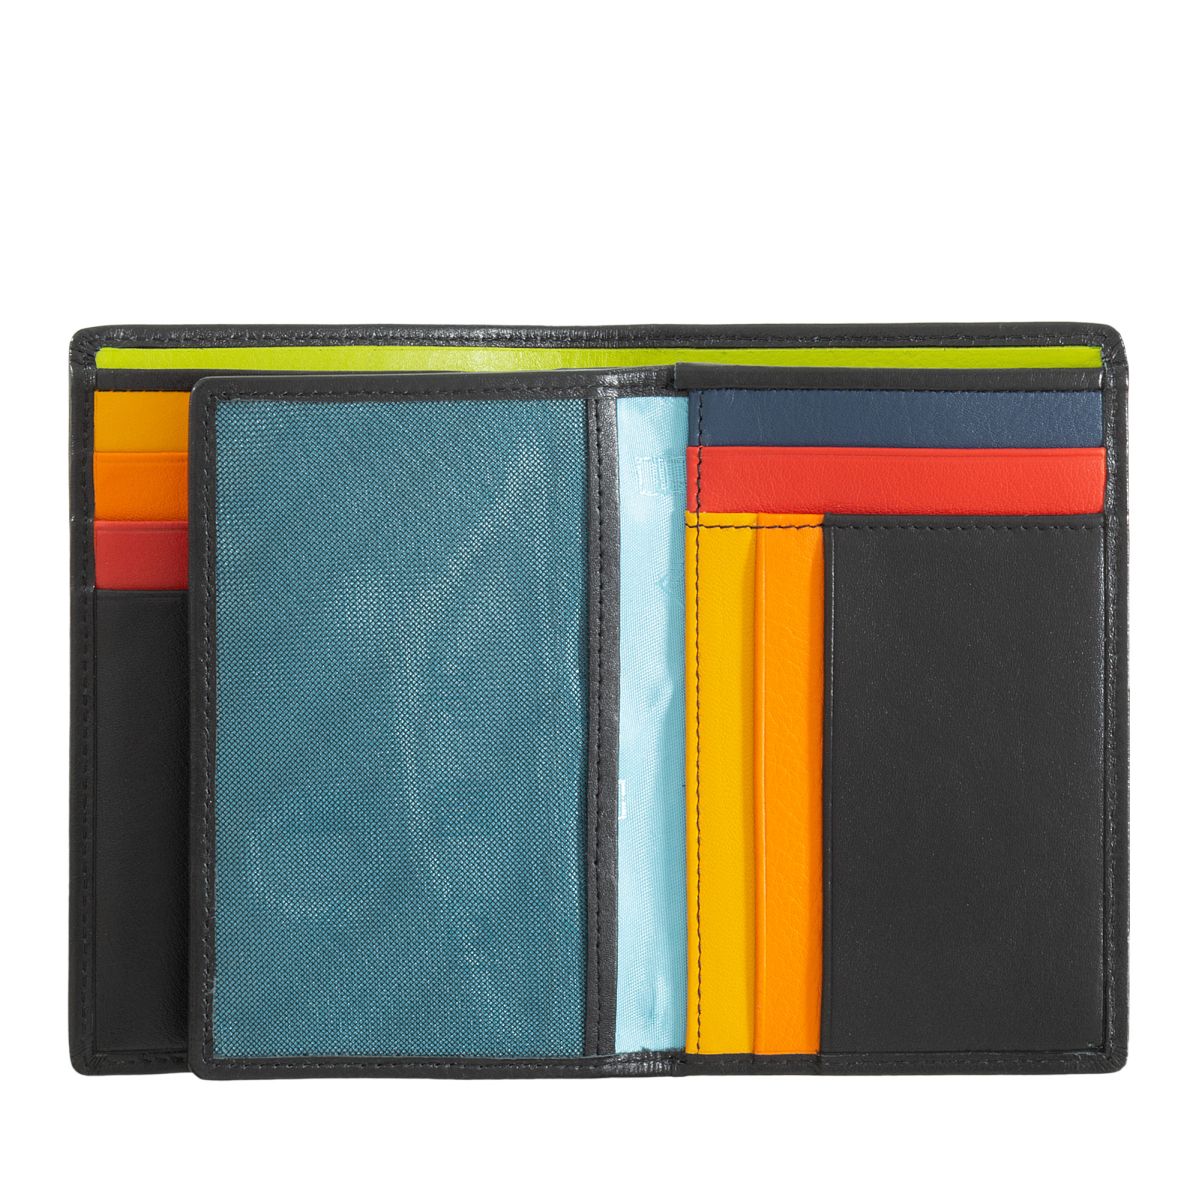 DuDu Mans leather folding wallet with inner zip - Black